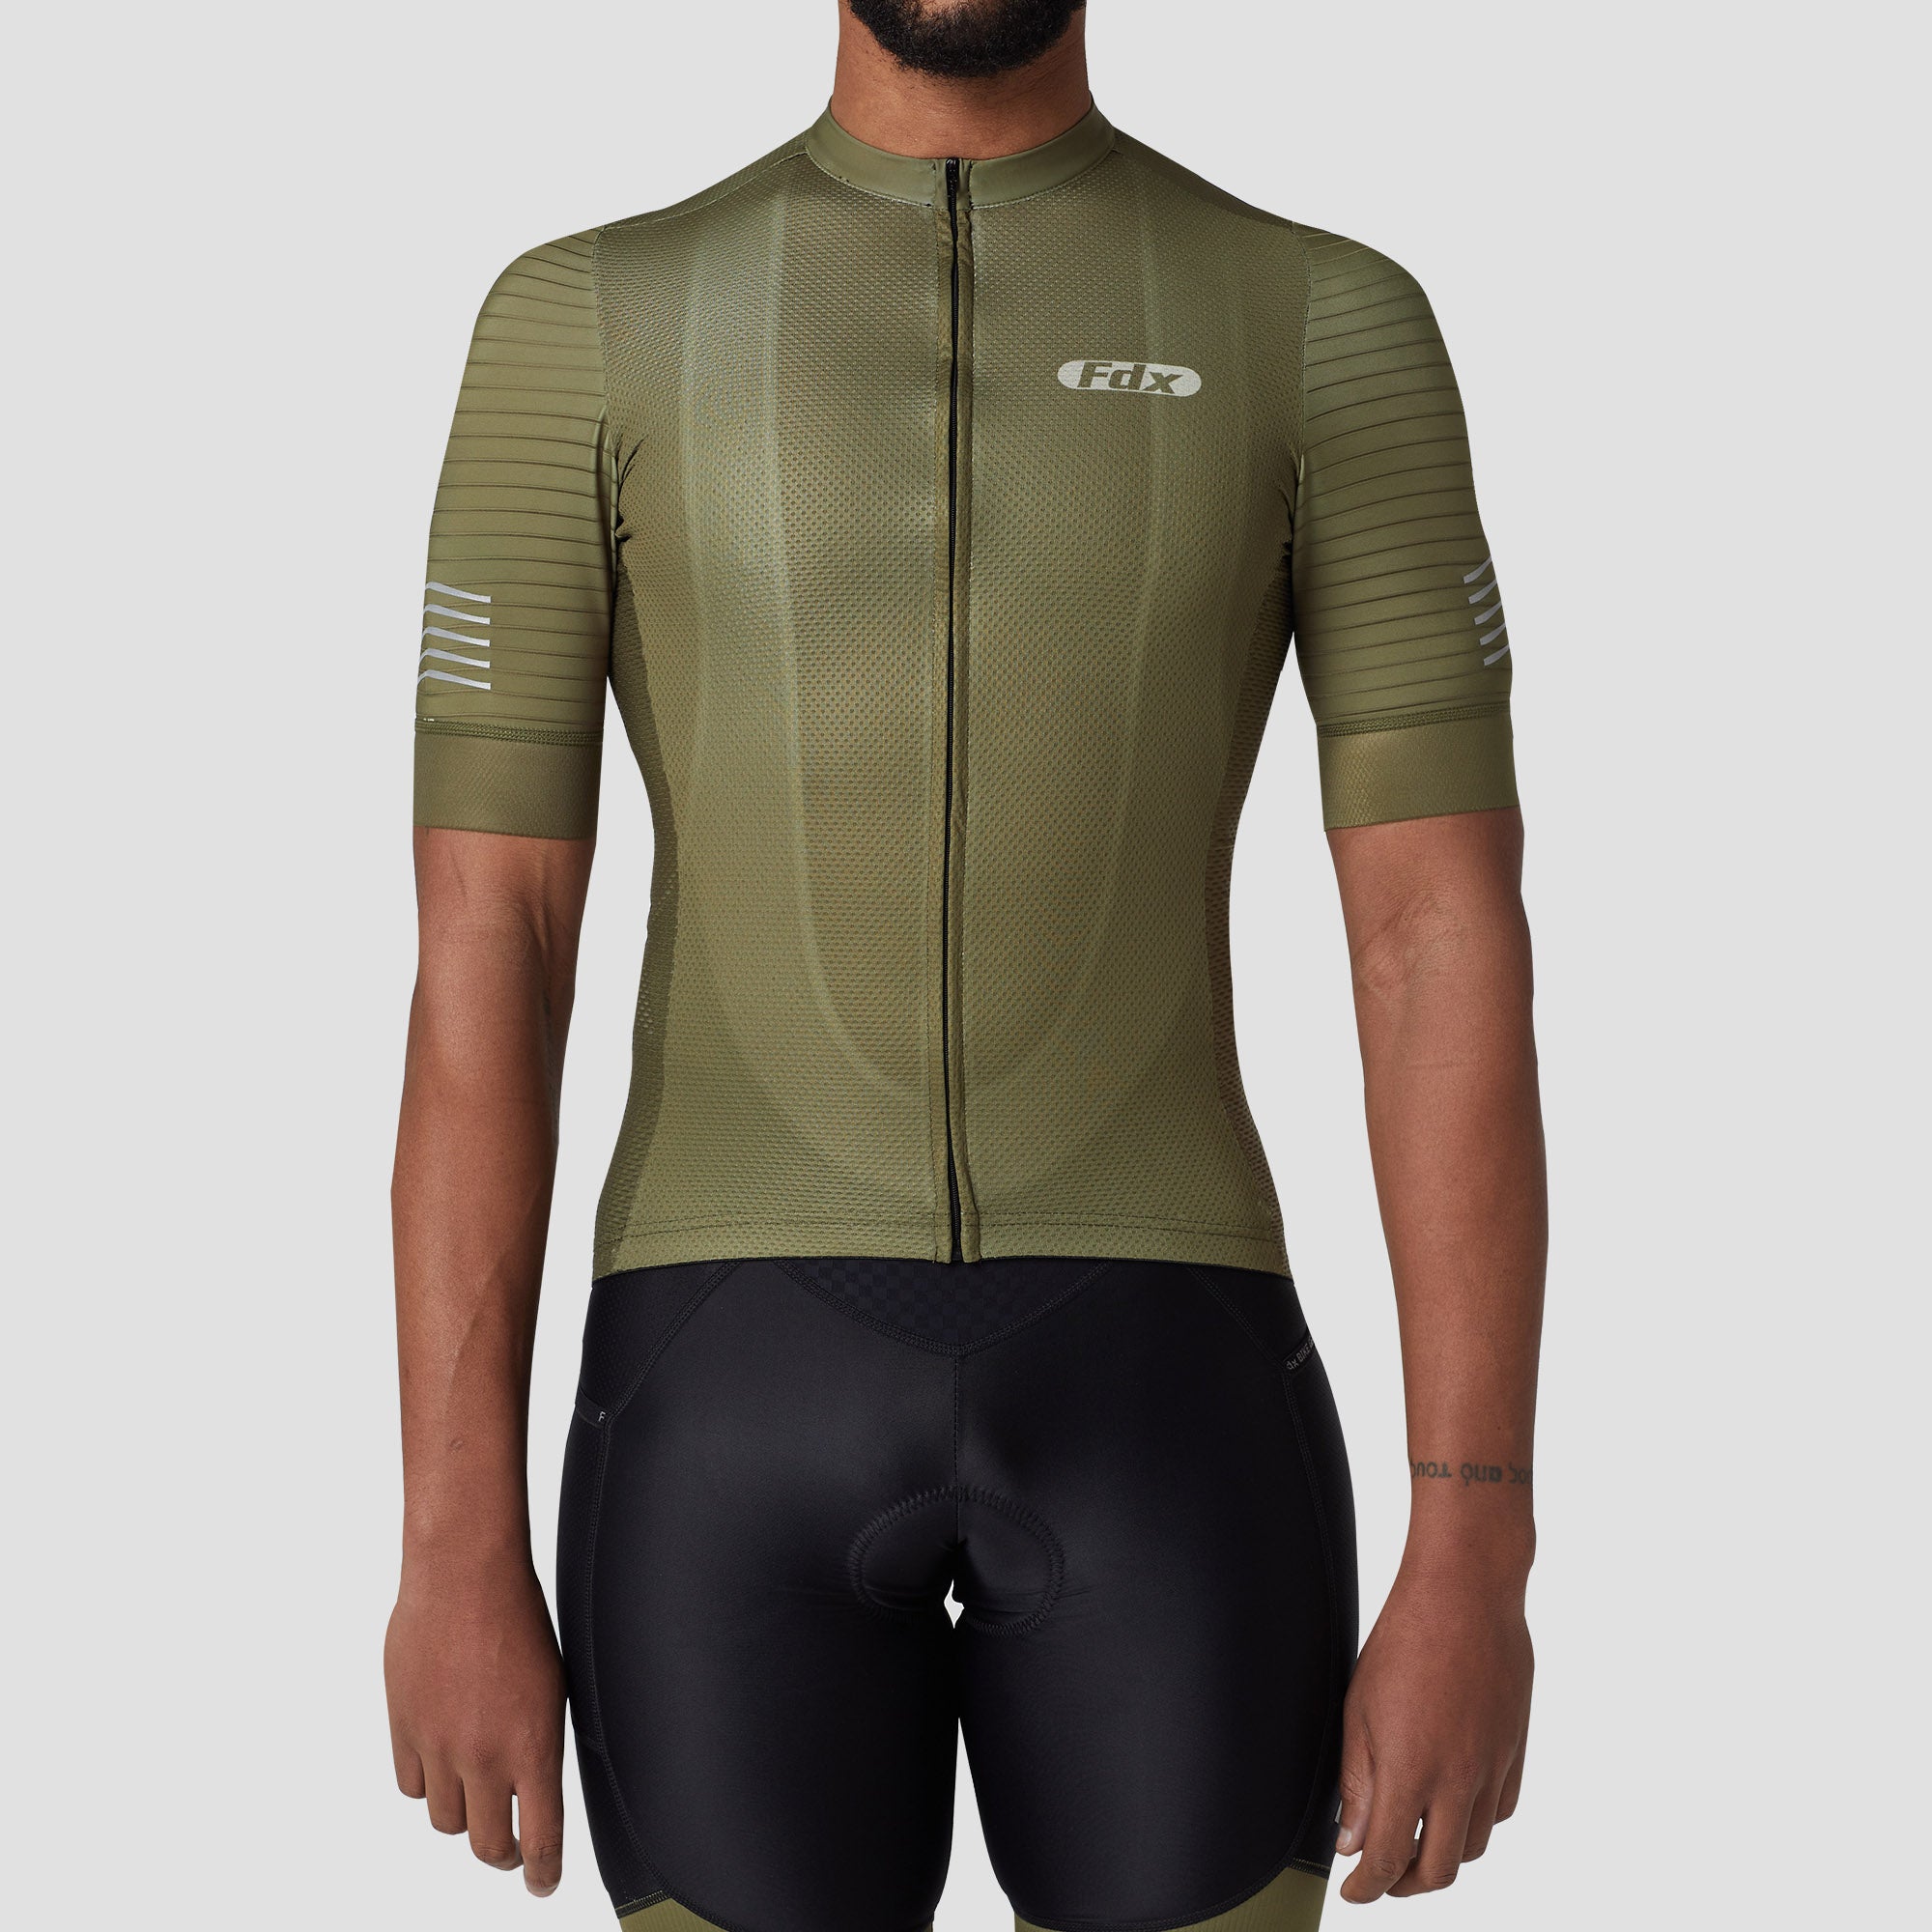 Fdx Mens Orange Sleeve Cycling Jersey for Summer Best Road Bike Wear Top Light Weight, Full Zipper, Pockets & Hi-viz Reflectors - Essential